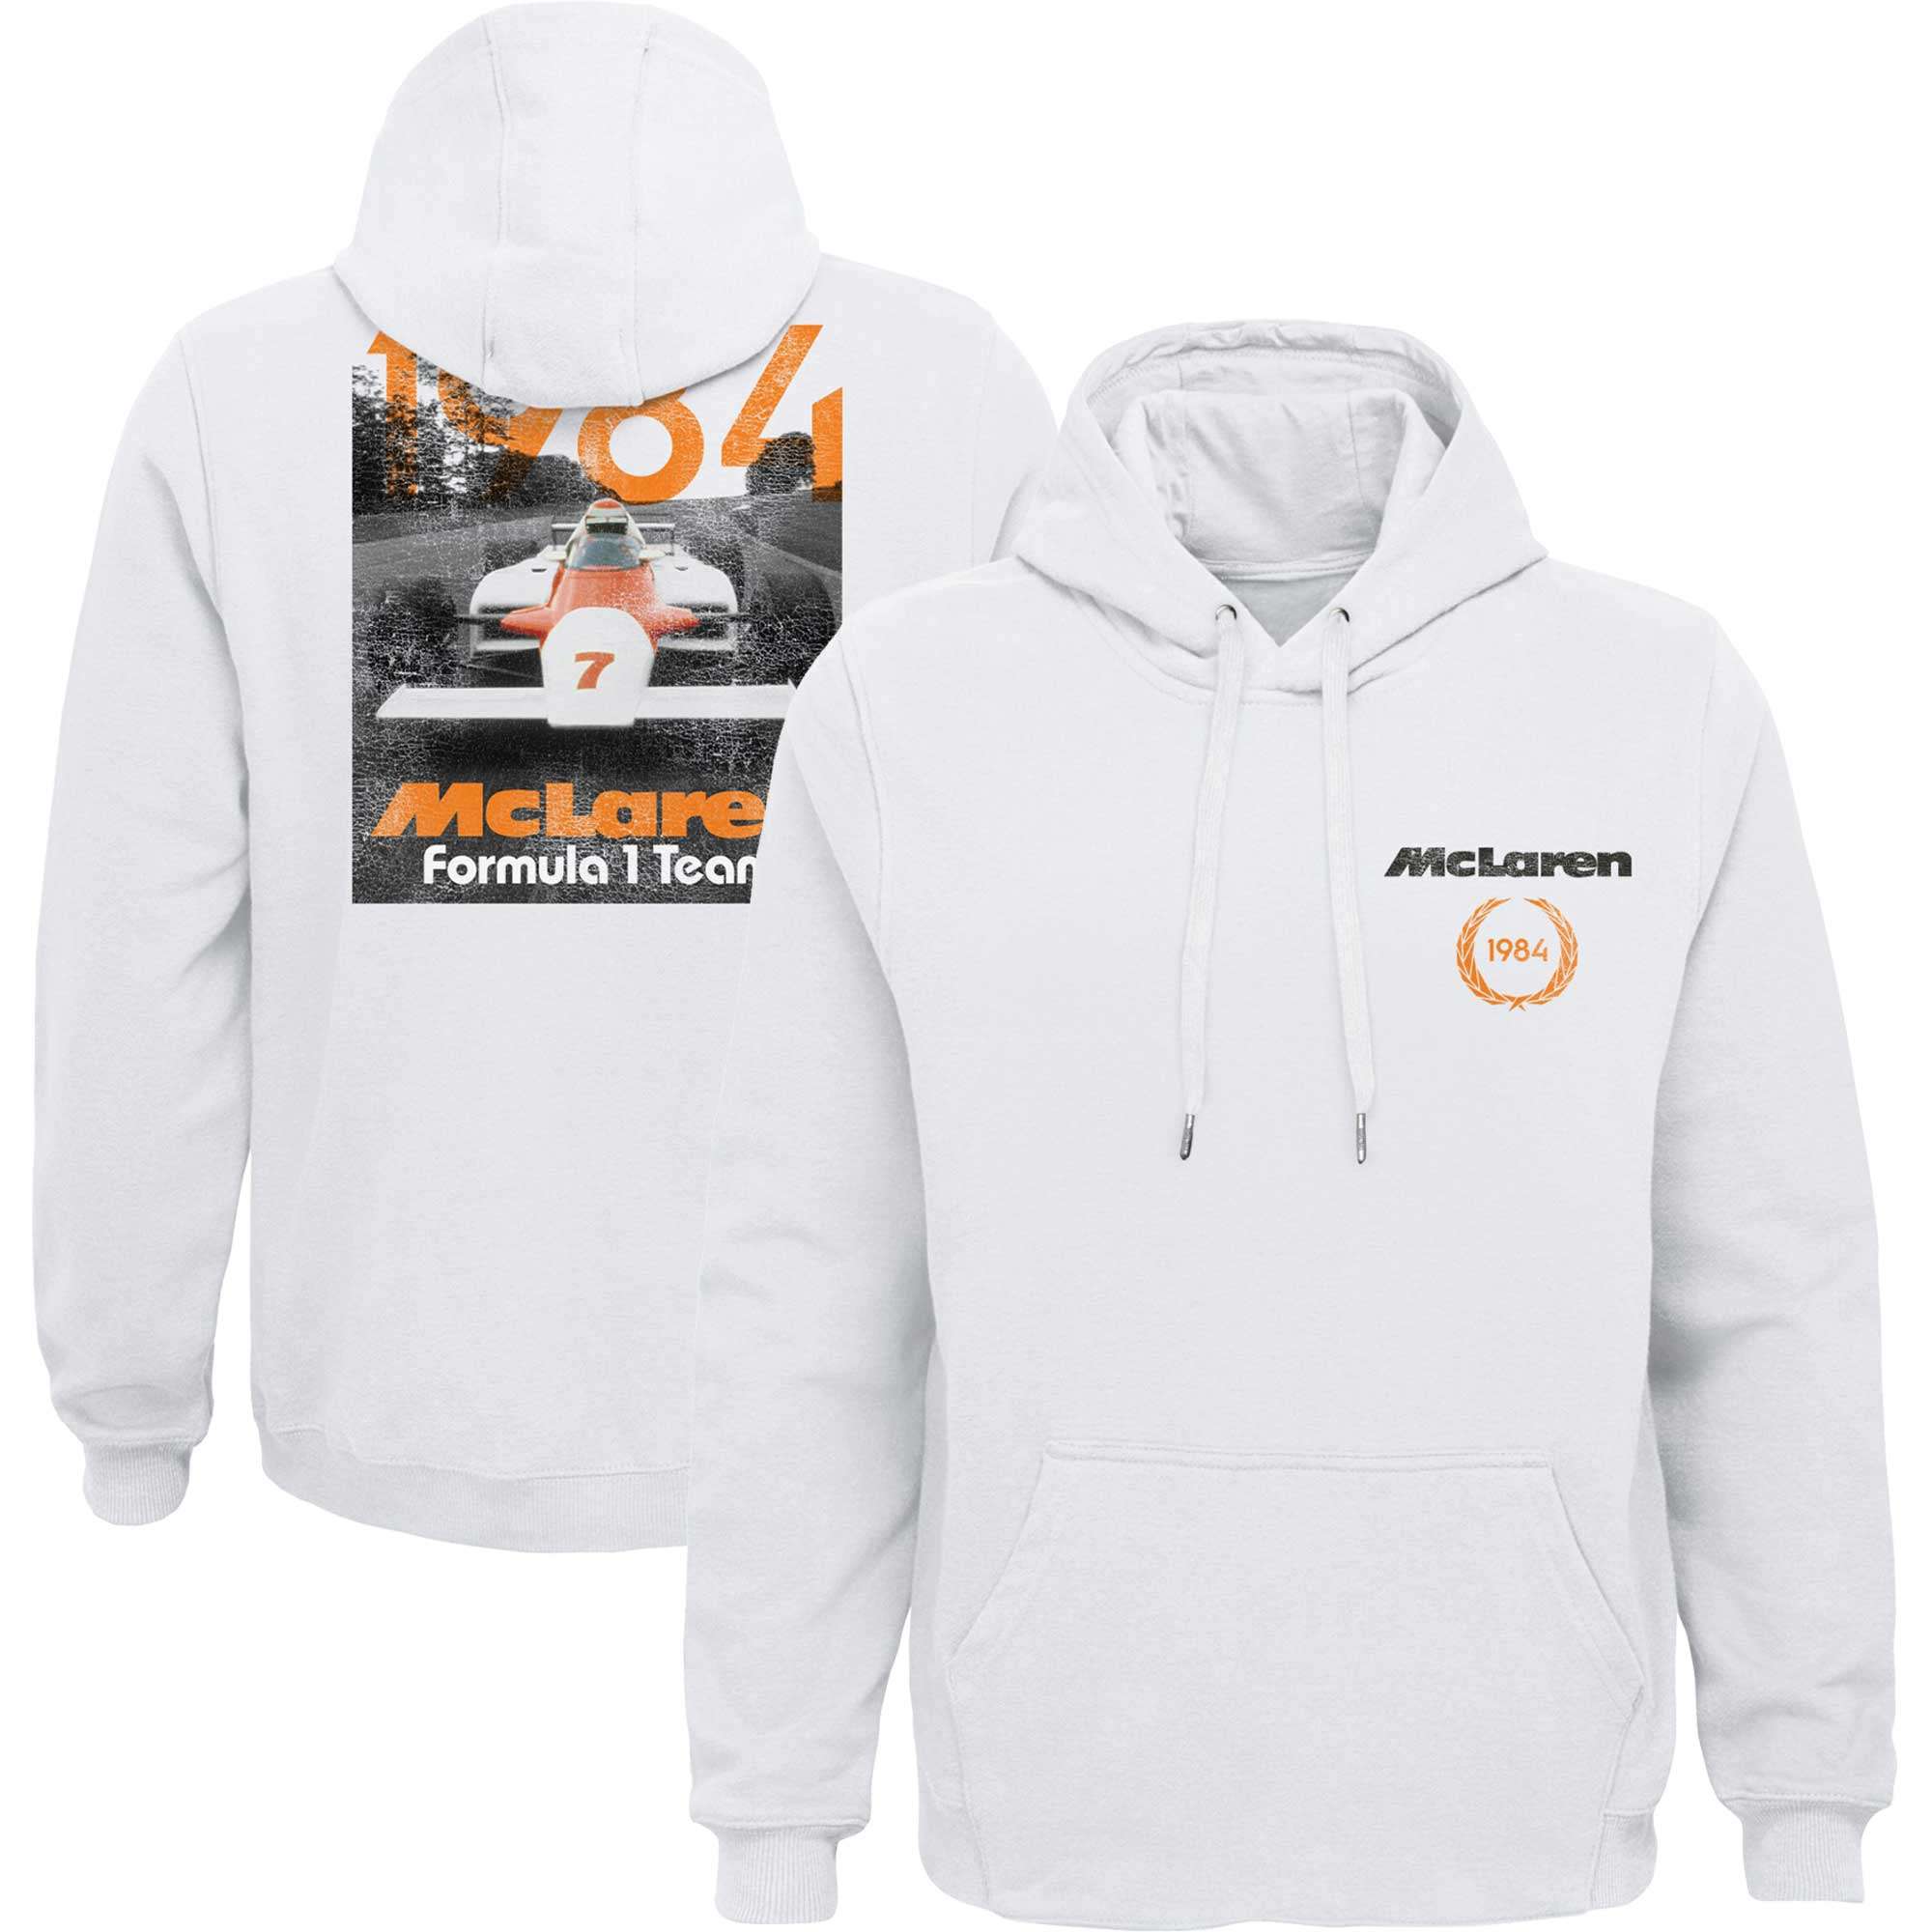 McLaren T-Shirt - White, Roblox Wiki